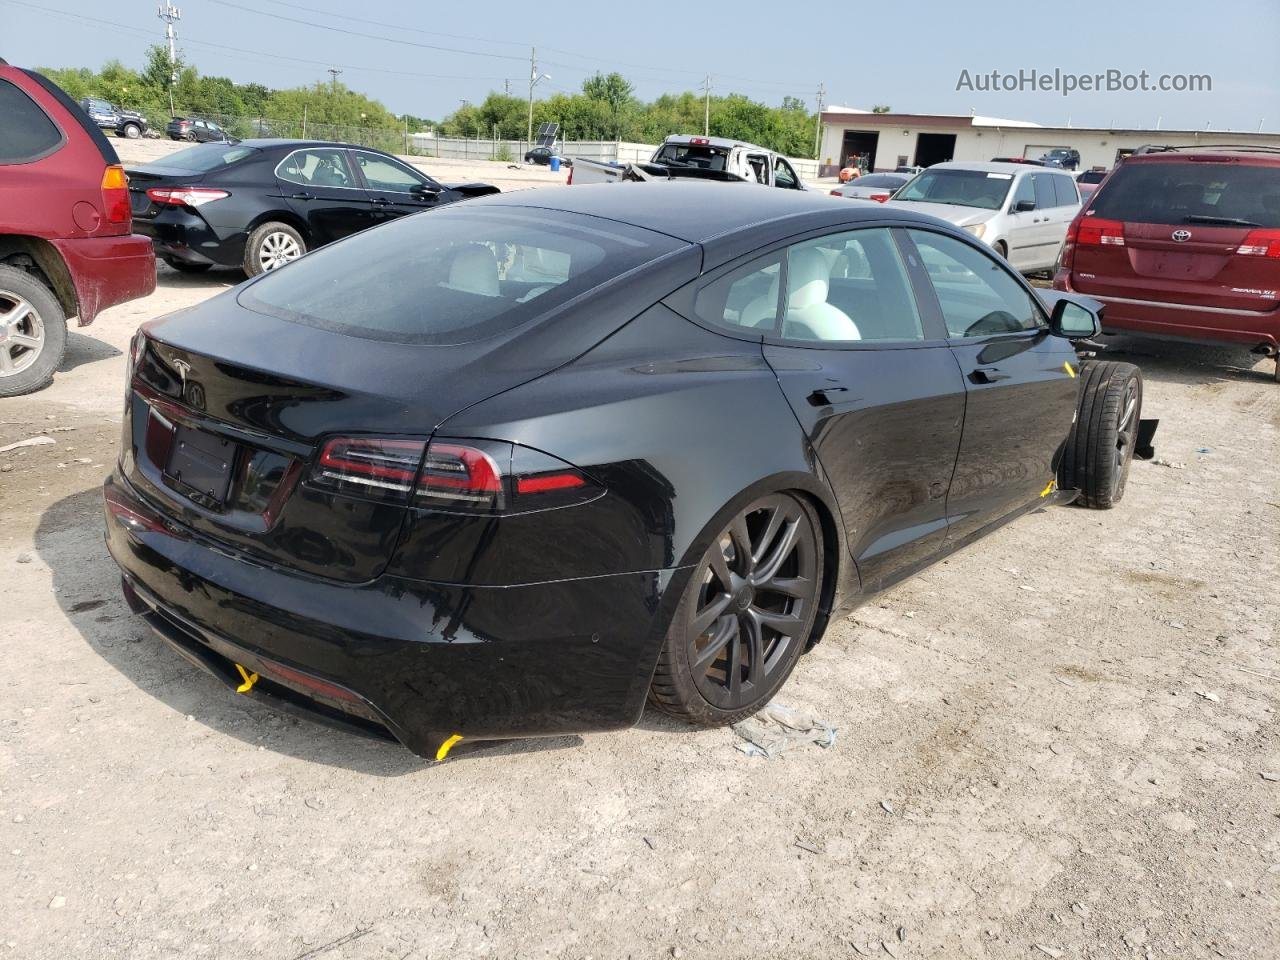 2022 Tesla Model S  Черный vin: 5YJSA1E57NF491191